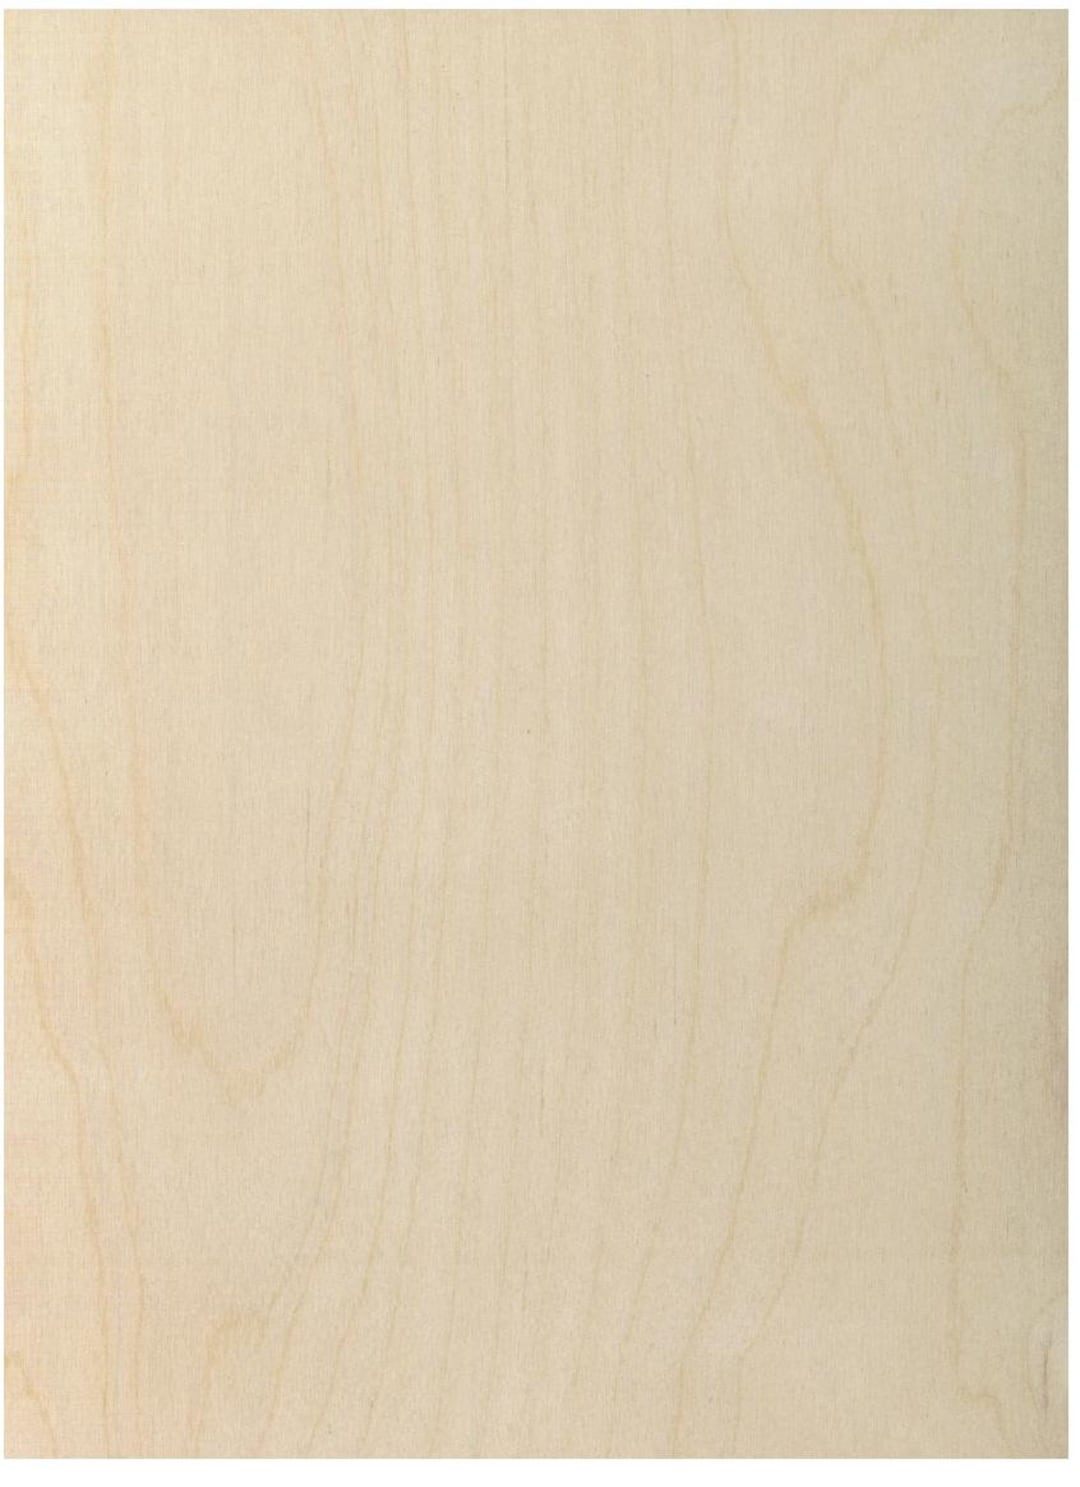 3 Mm 1/8 X 16 X 48 Premium Baltic Birch Plywood B/BB Grade 18 Sheets 